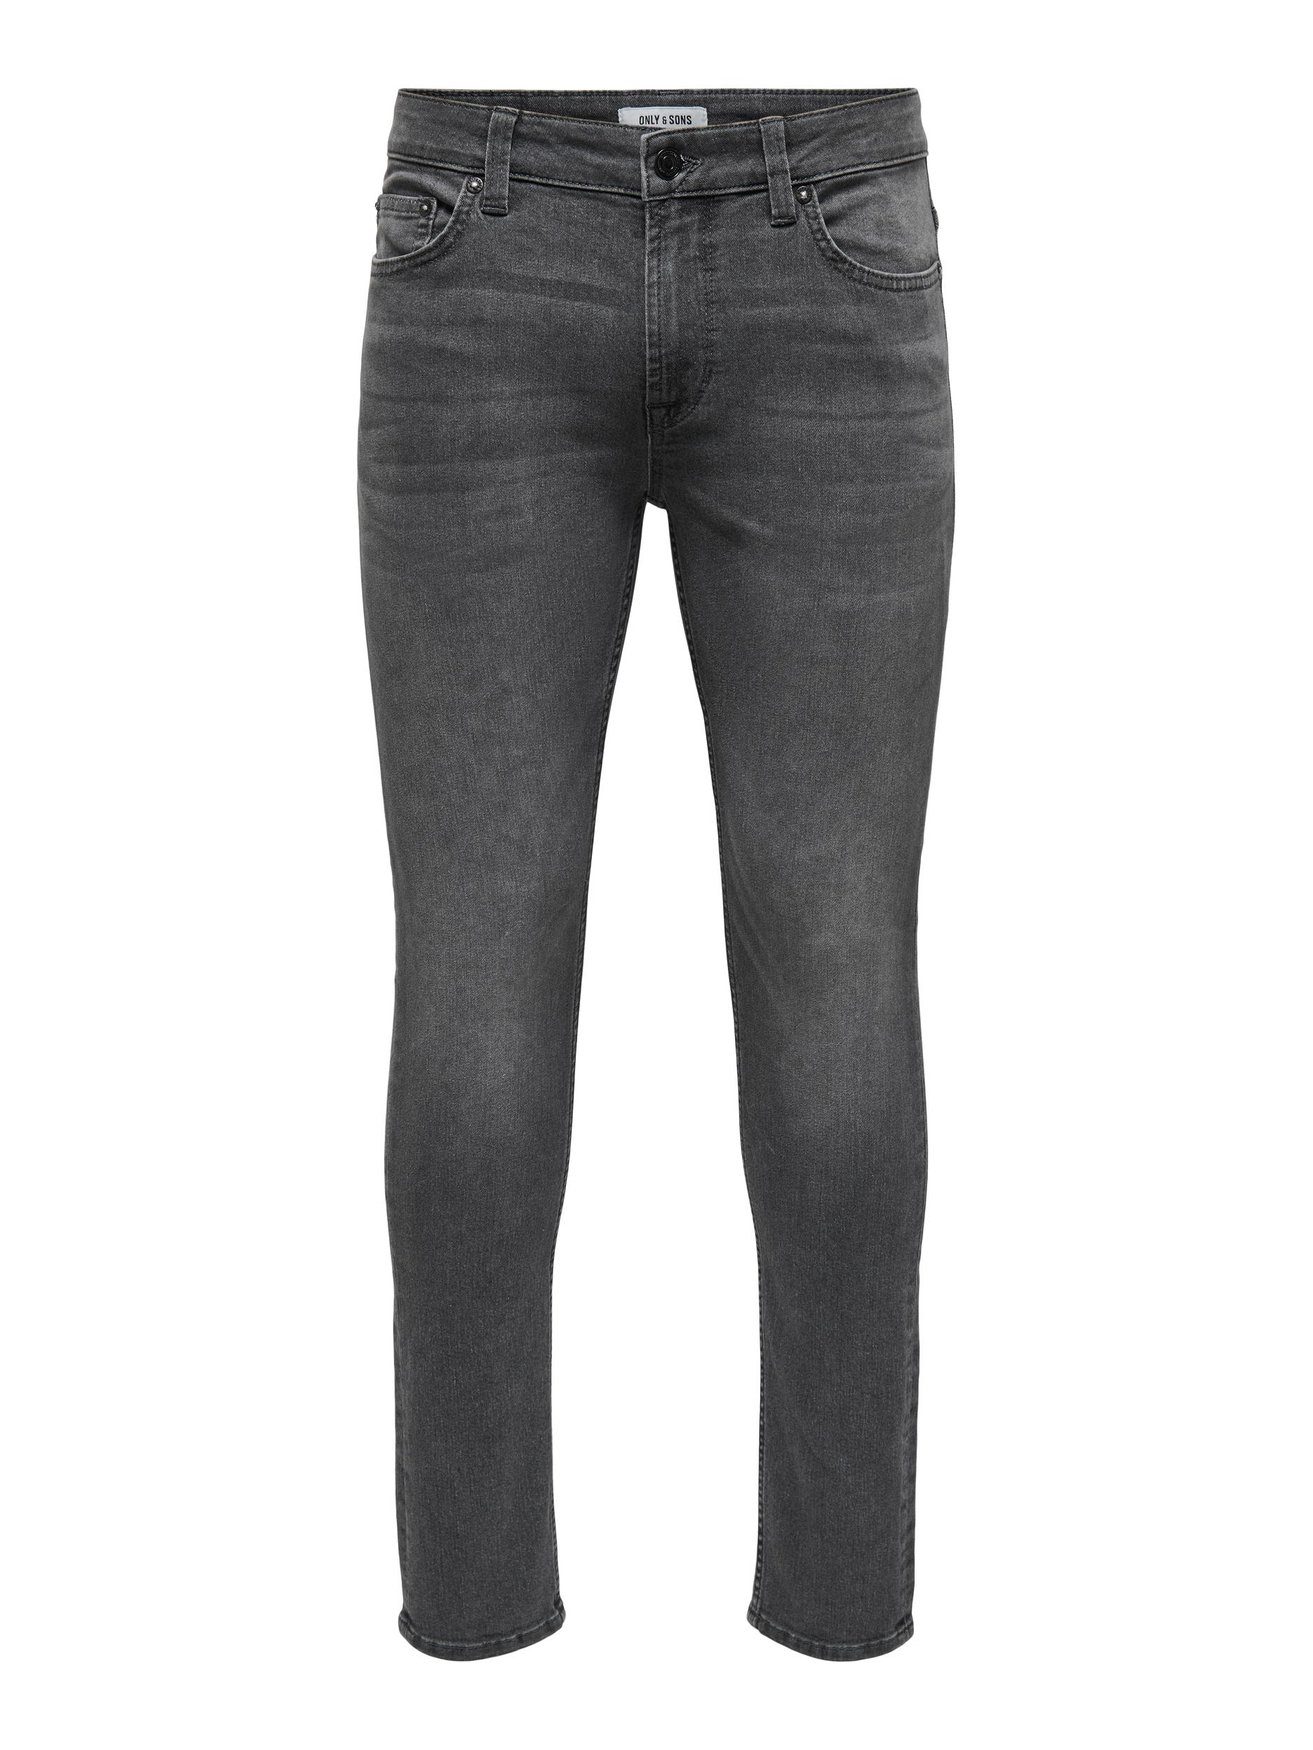 ONLY & SONS Slim-fit-Jeans Slim Fit Jeans Basic Hose Stoned Washed Denim Pants ONSLOOM 5615 in Hellgrau | Slim-Fit Jeans